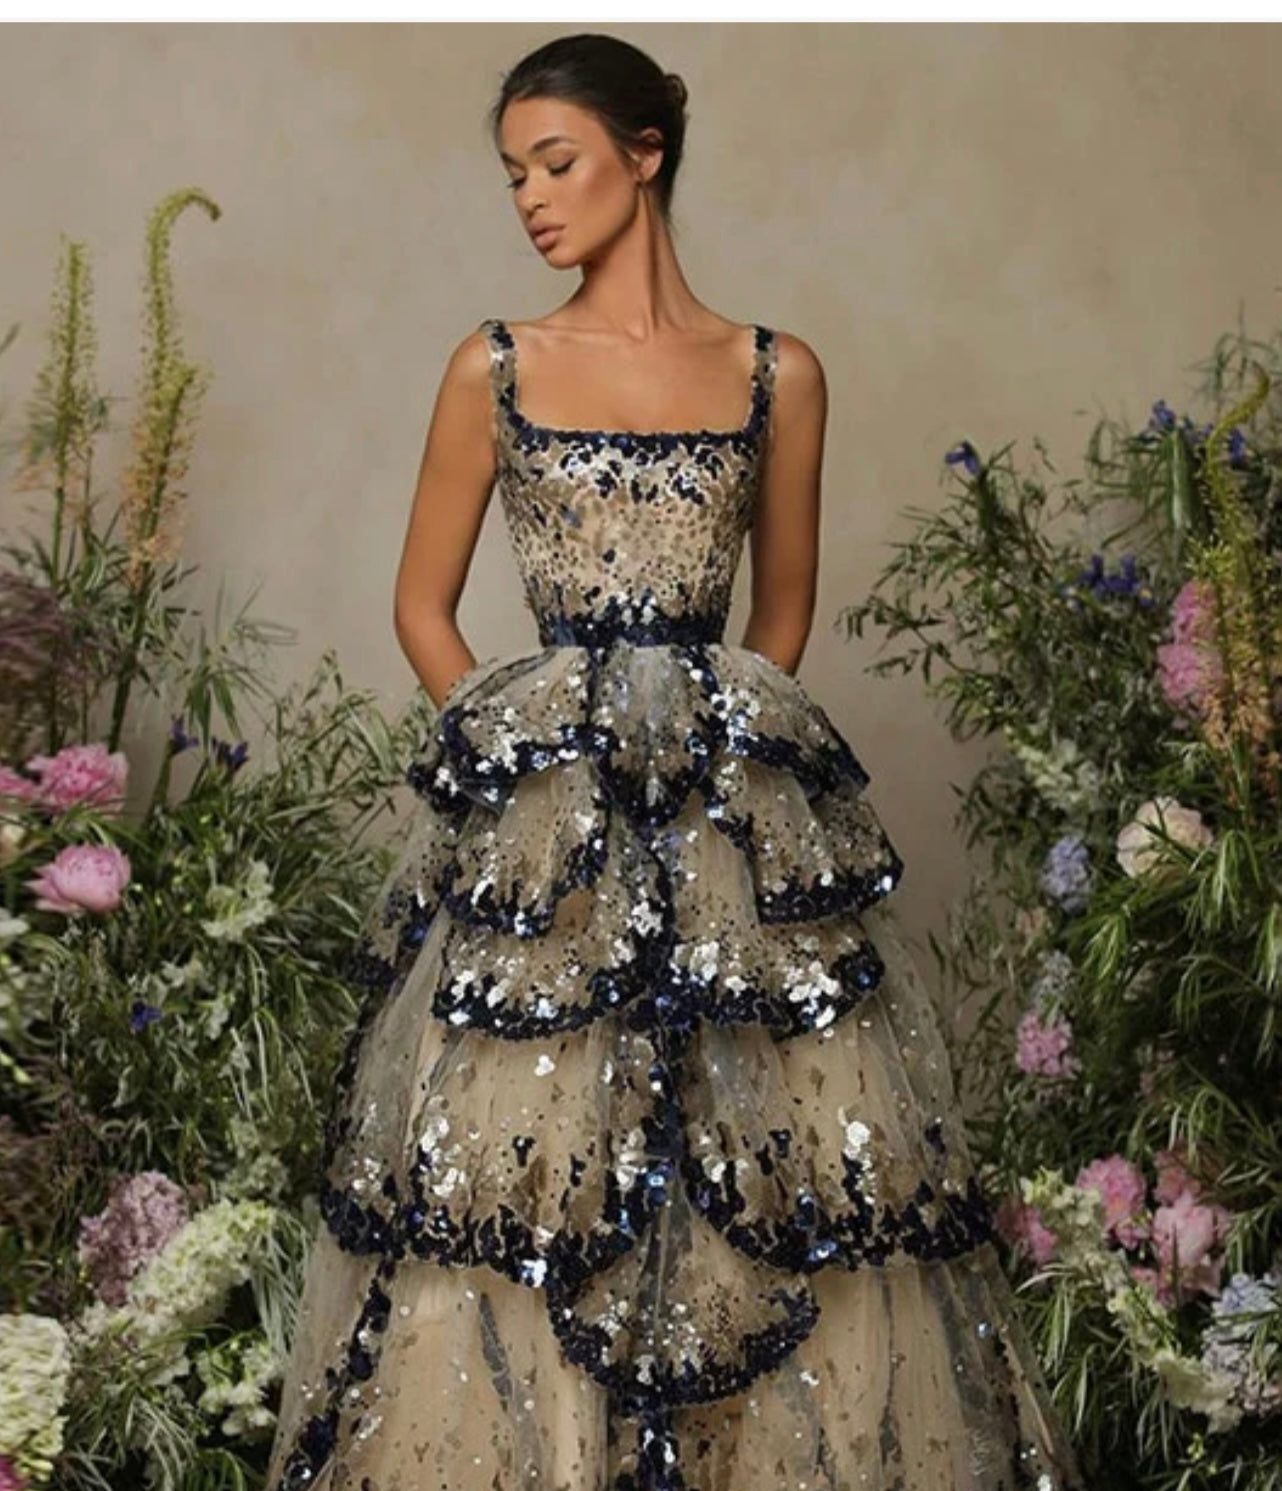 FancyENF Emotional Luxury Sequin Ruffle Gown